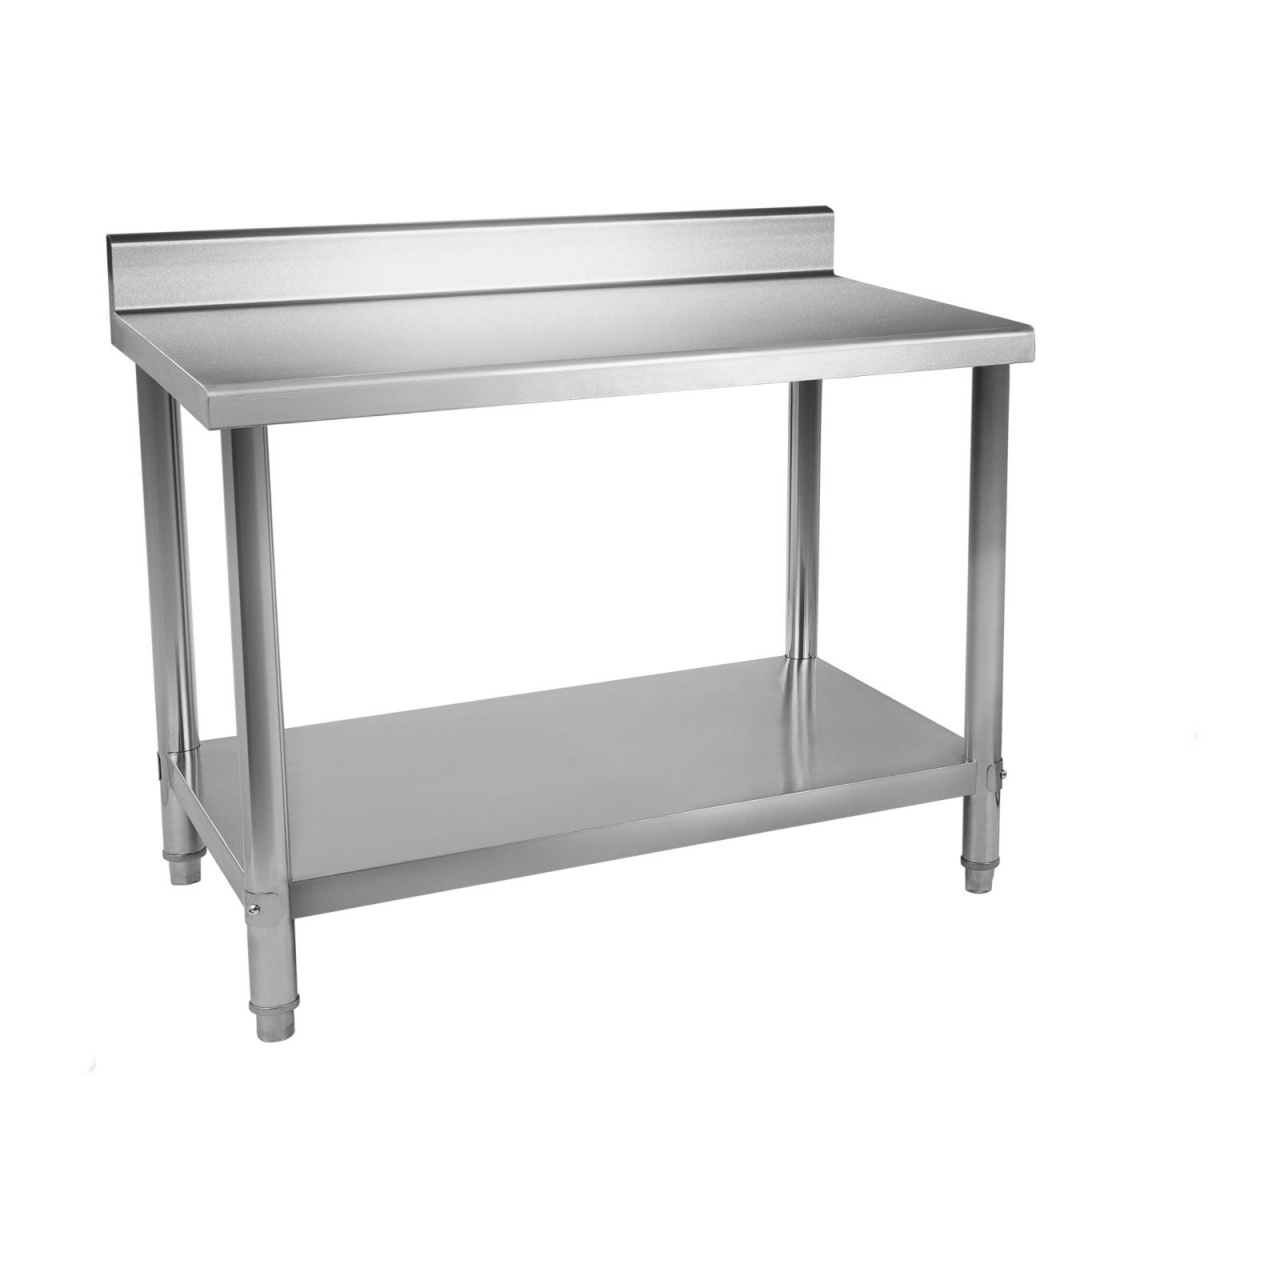 Table inox avec rebord - 140x70 cm - matospro